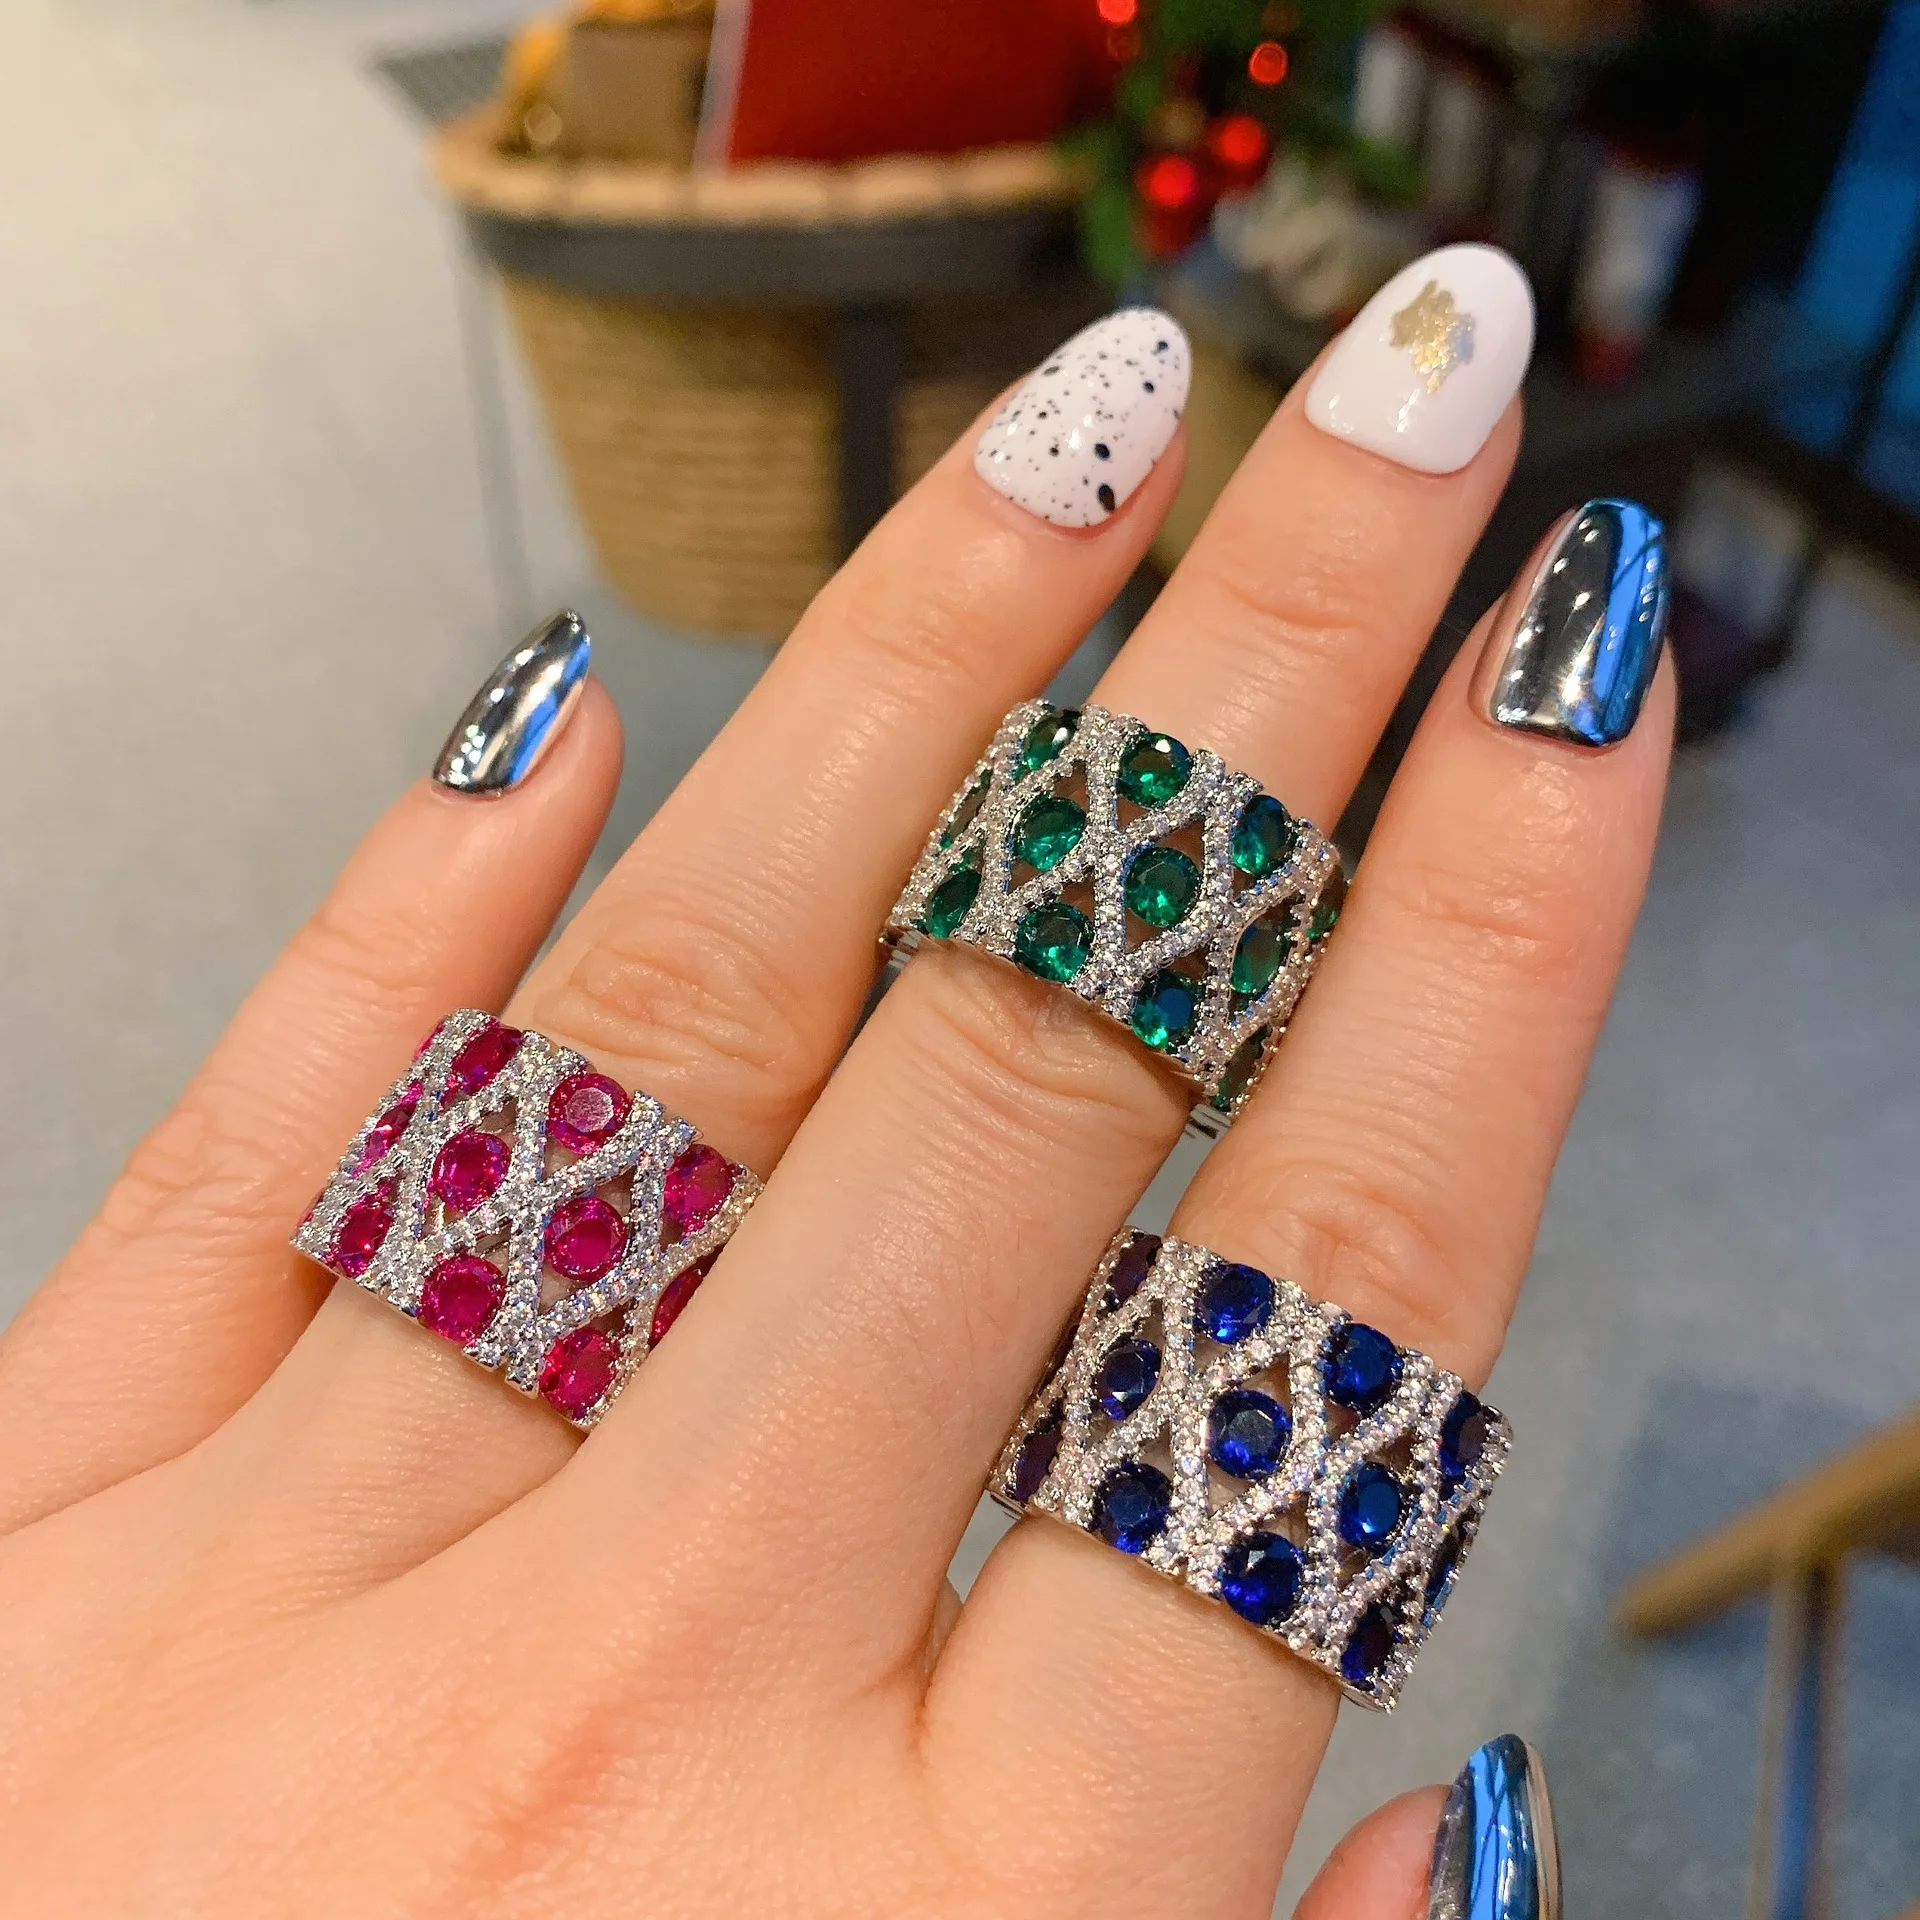 

Ruby Stone Blue Crystal Retro Women's Engagement Rings Set Jewelry Runes Cubic Zircon Fashion Wedding Anniversary Friend Gift